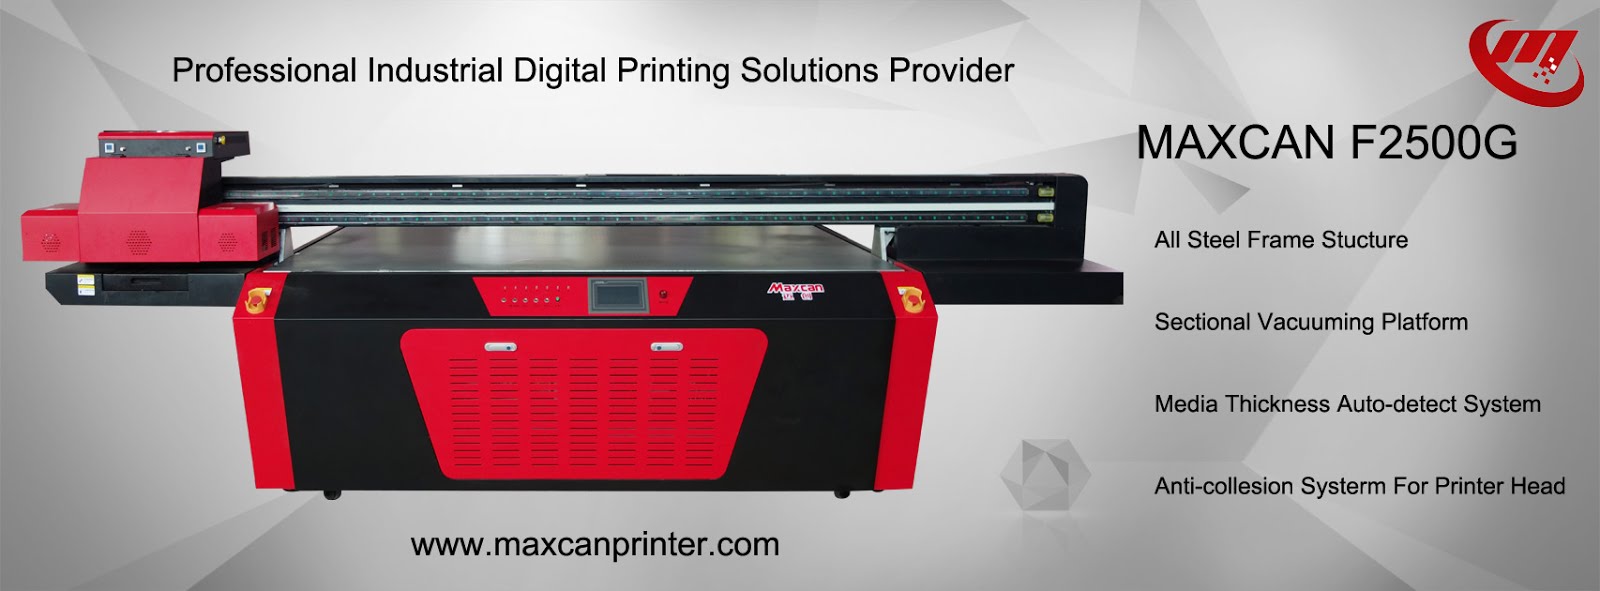 Maxcan Color Printing